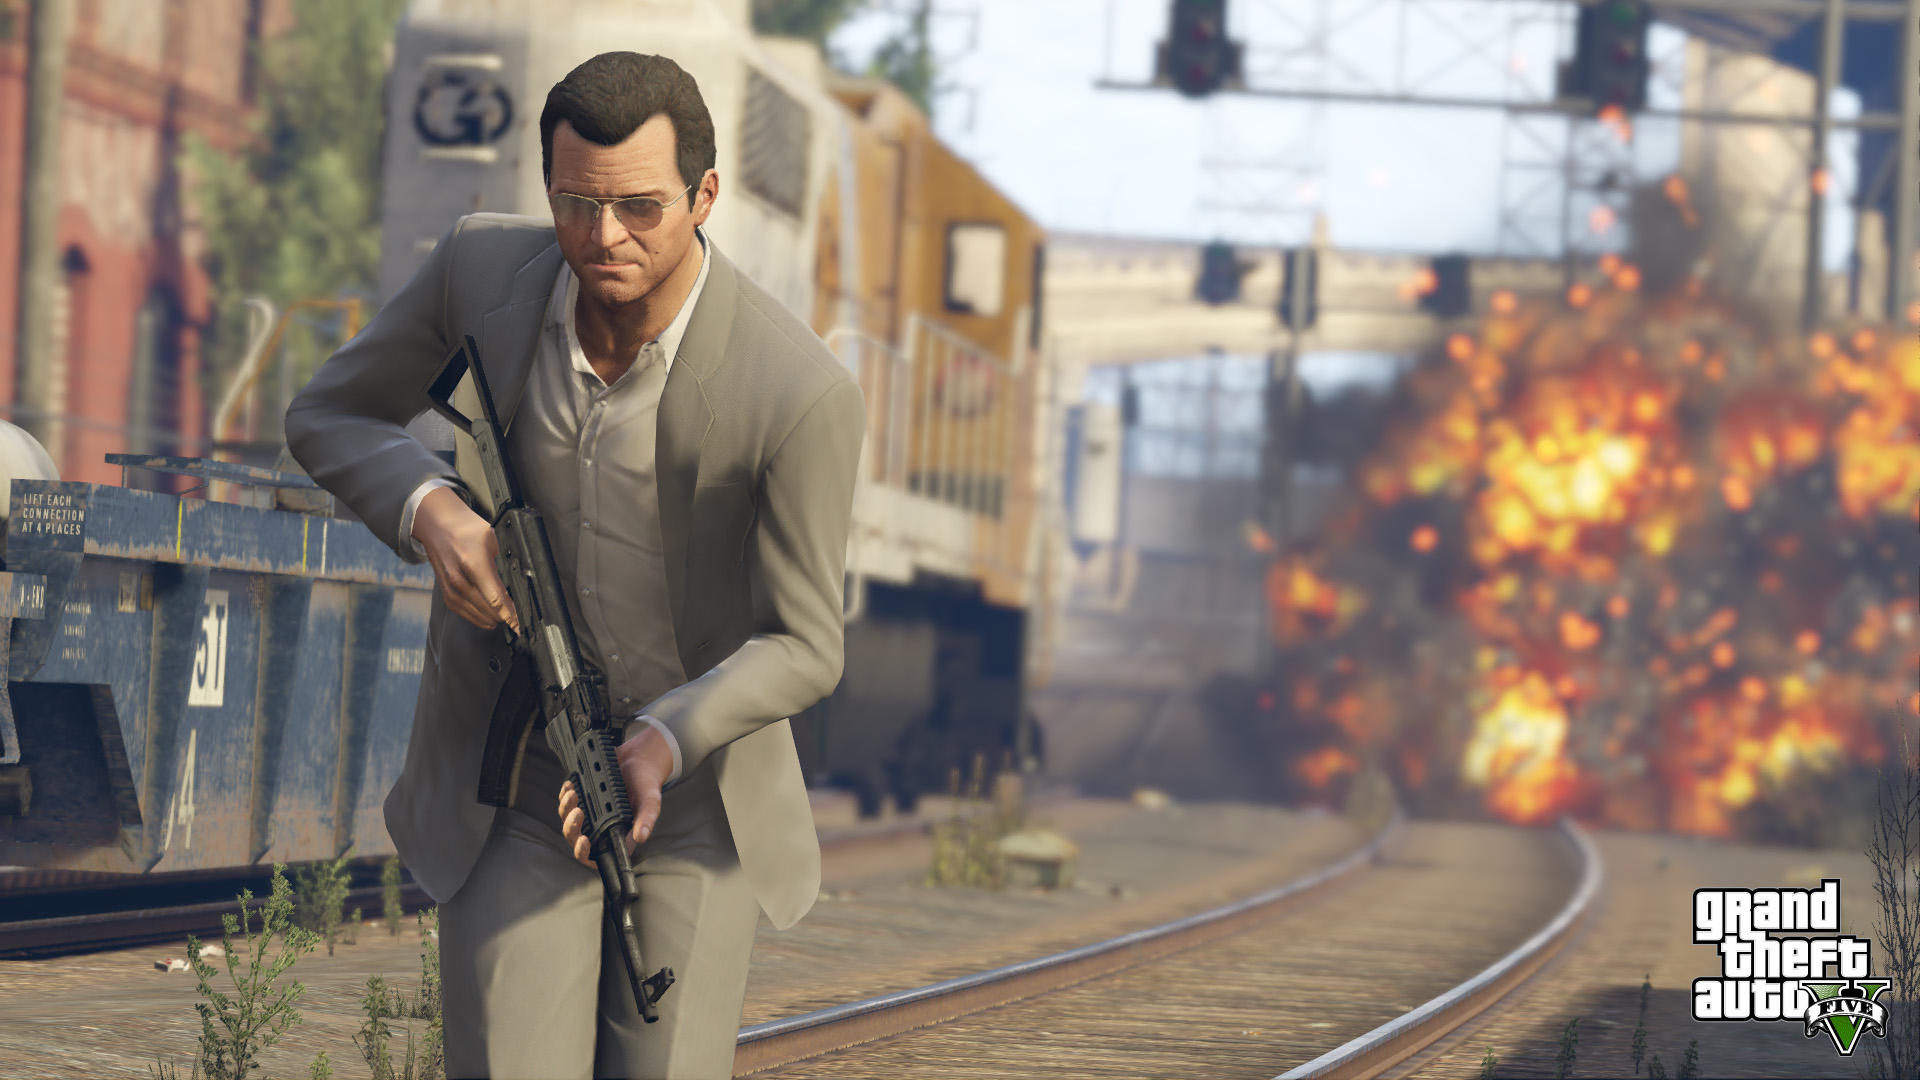 Grand Theft Auto V - PC Performance Analysis